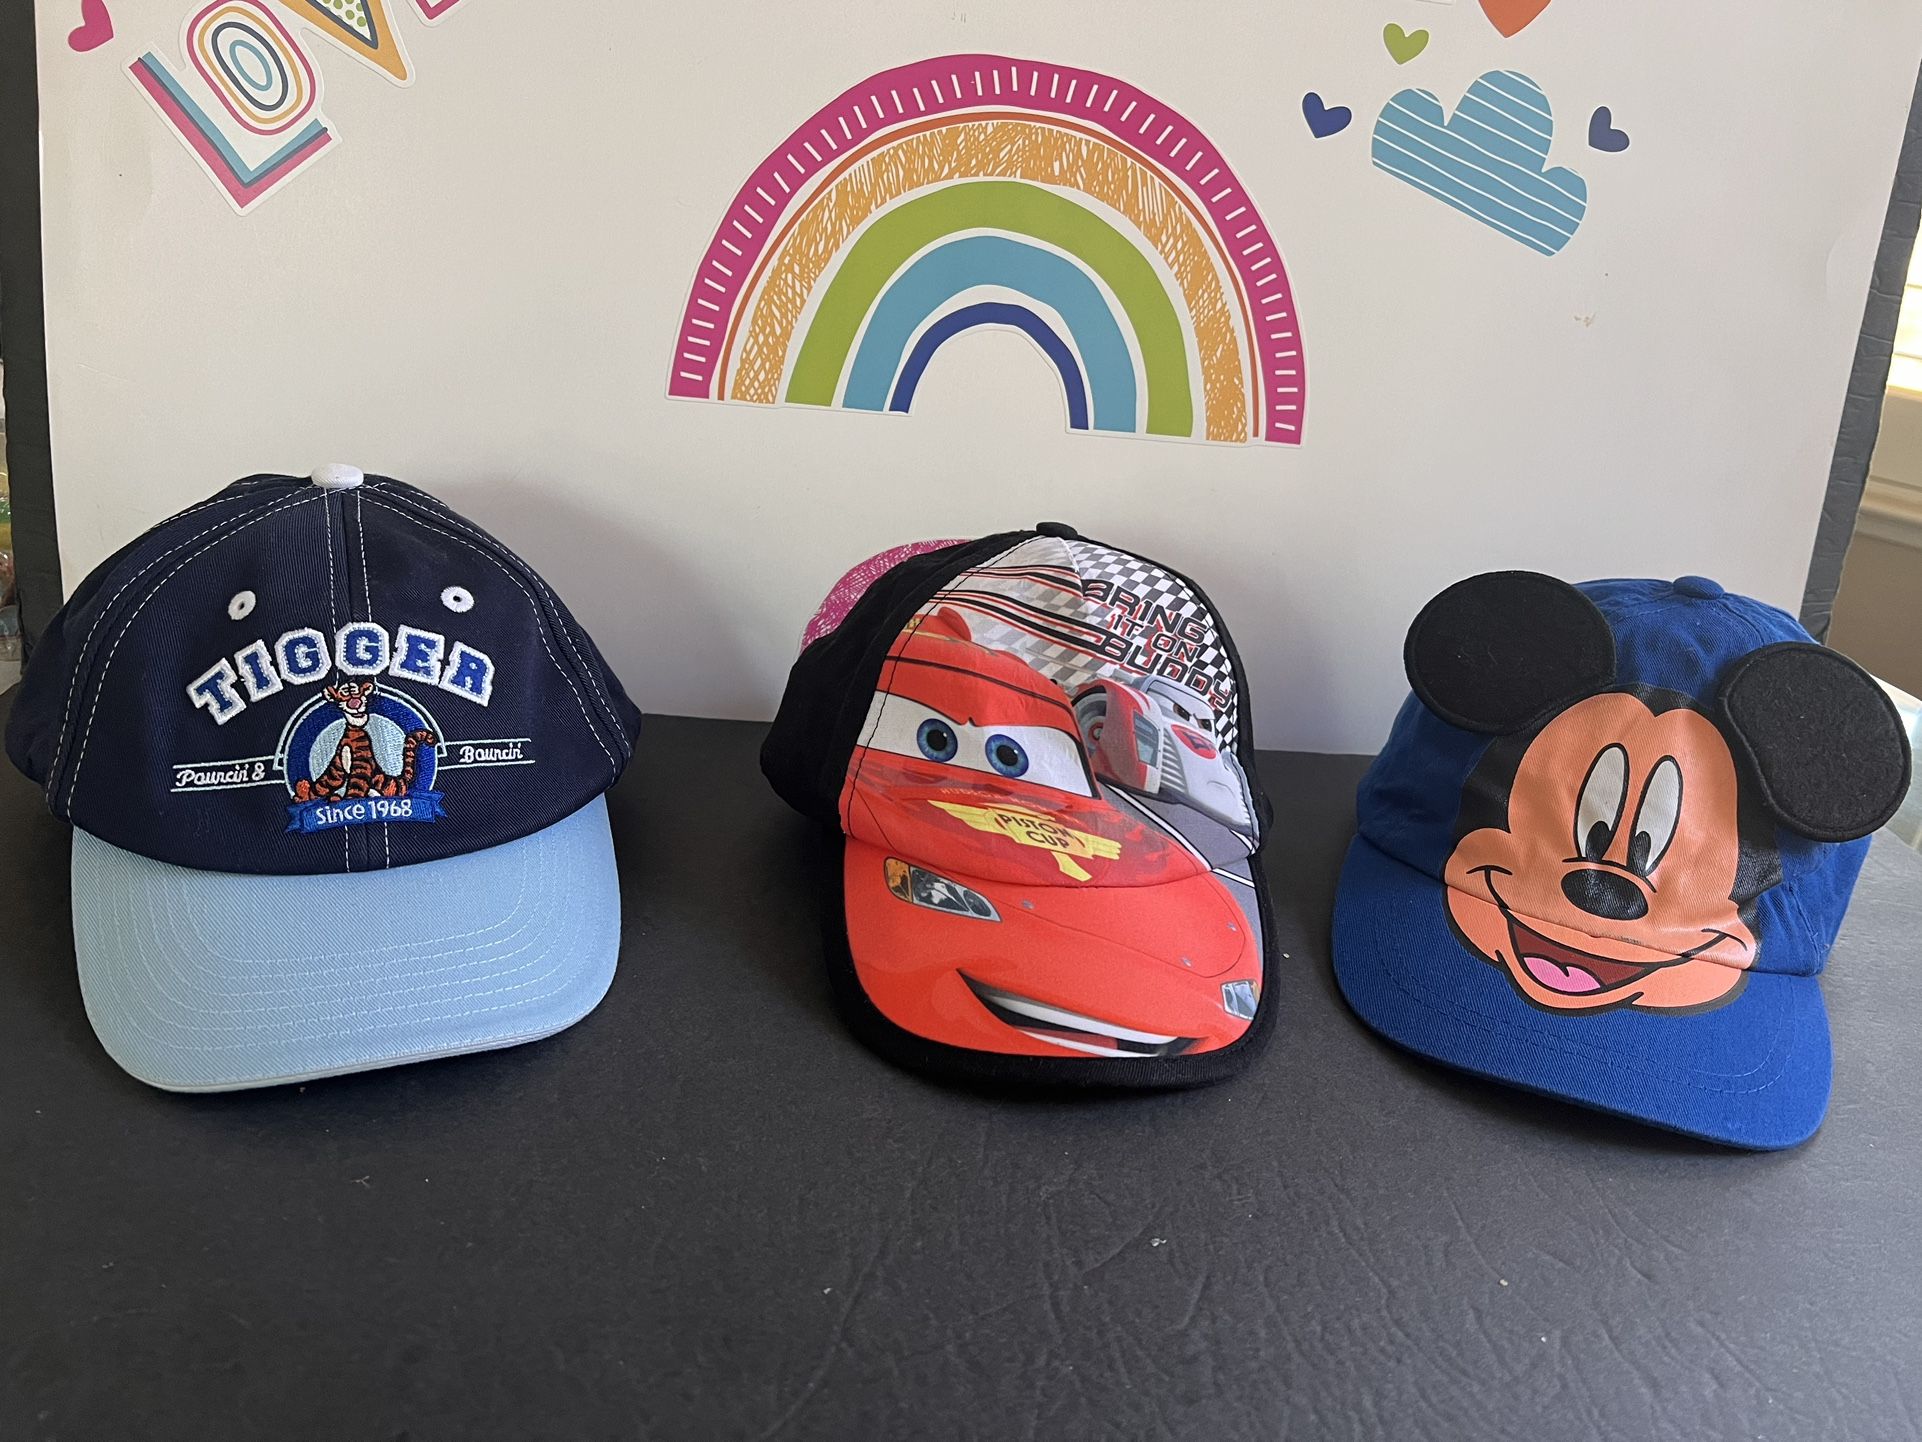 DISNEY KIDS HATS!  $3.00 Each - PERFECT FOR DISNEYLAND!